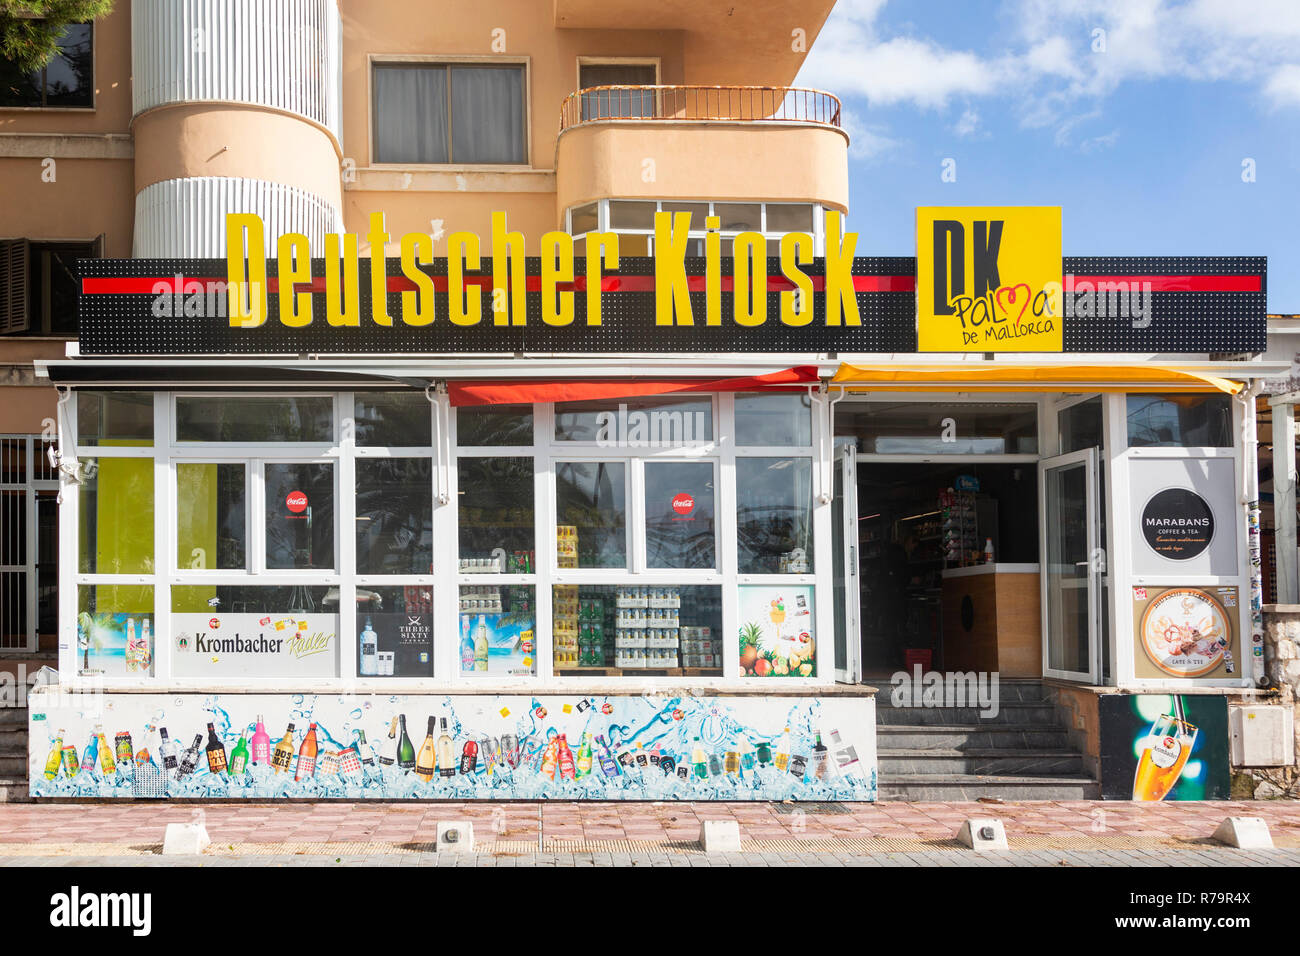 Deutschen shop oder Kiosk in der so genannten Ballermann Gegend von Playa de Palma, Platya de Palma, Mallorca, Mallorca, Balearen, Spanien, Europa Stockfoto